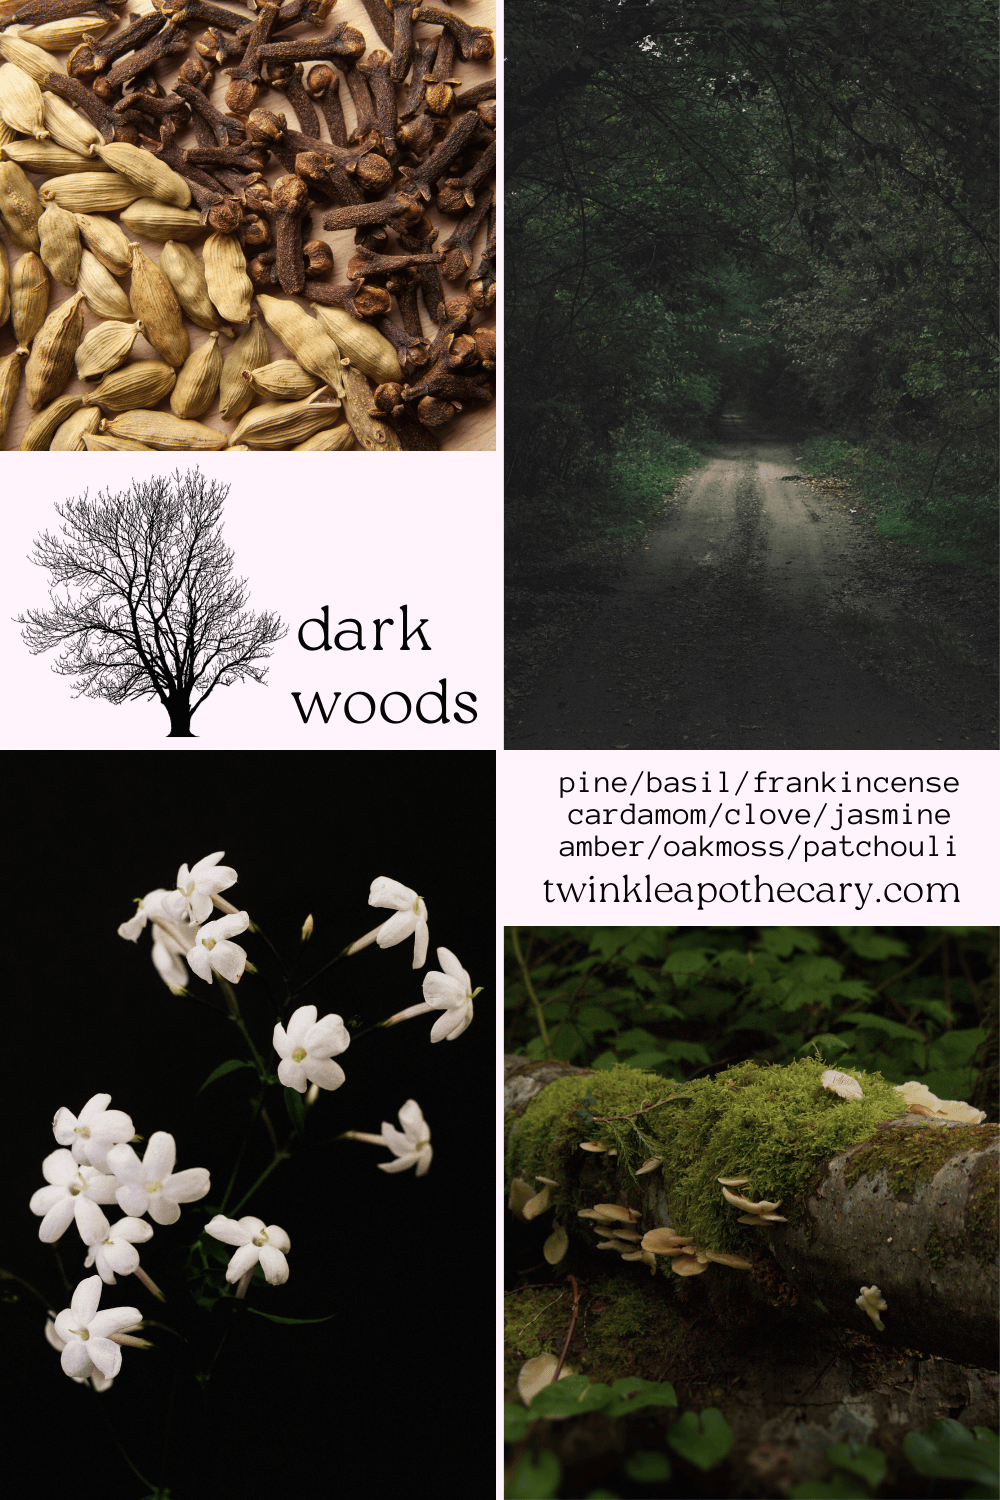 Dark Woods: stand-alone fragrance